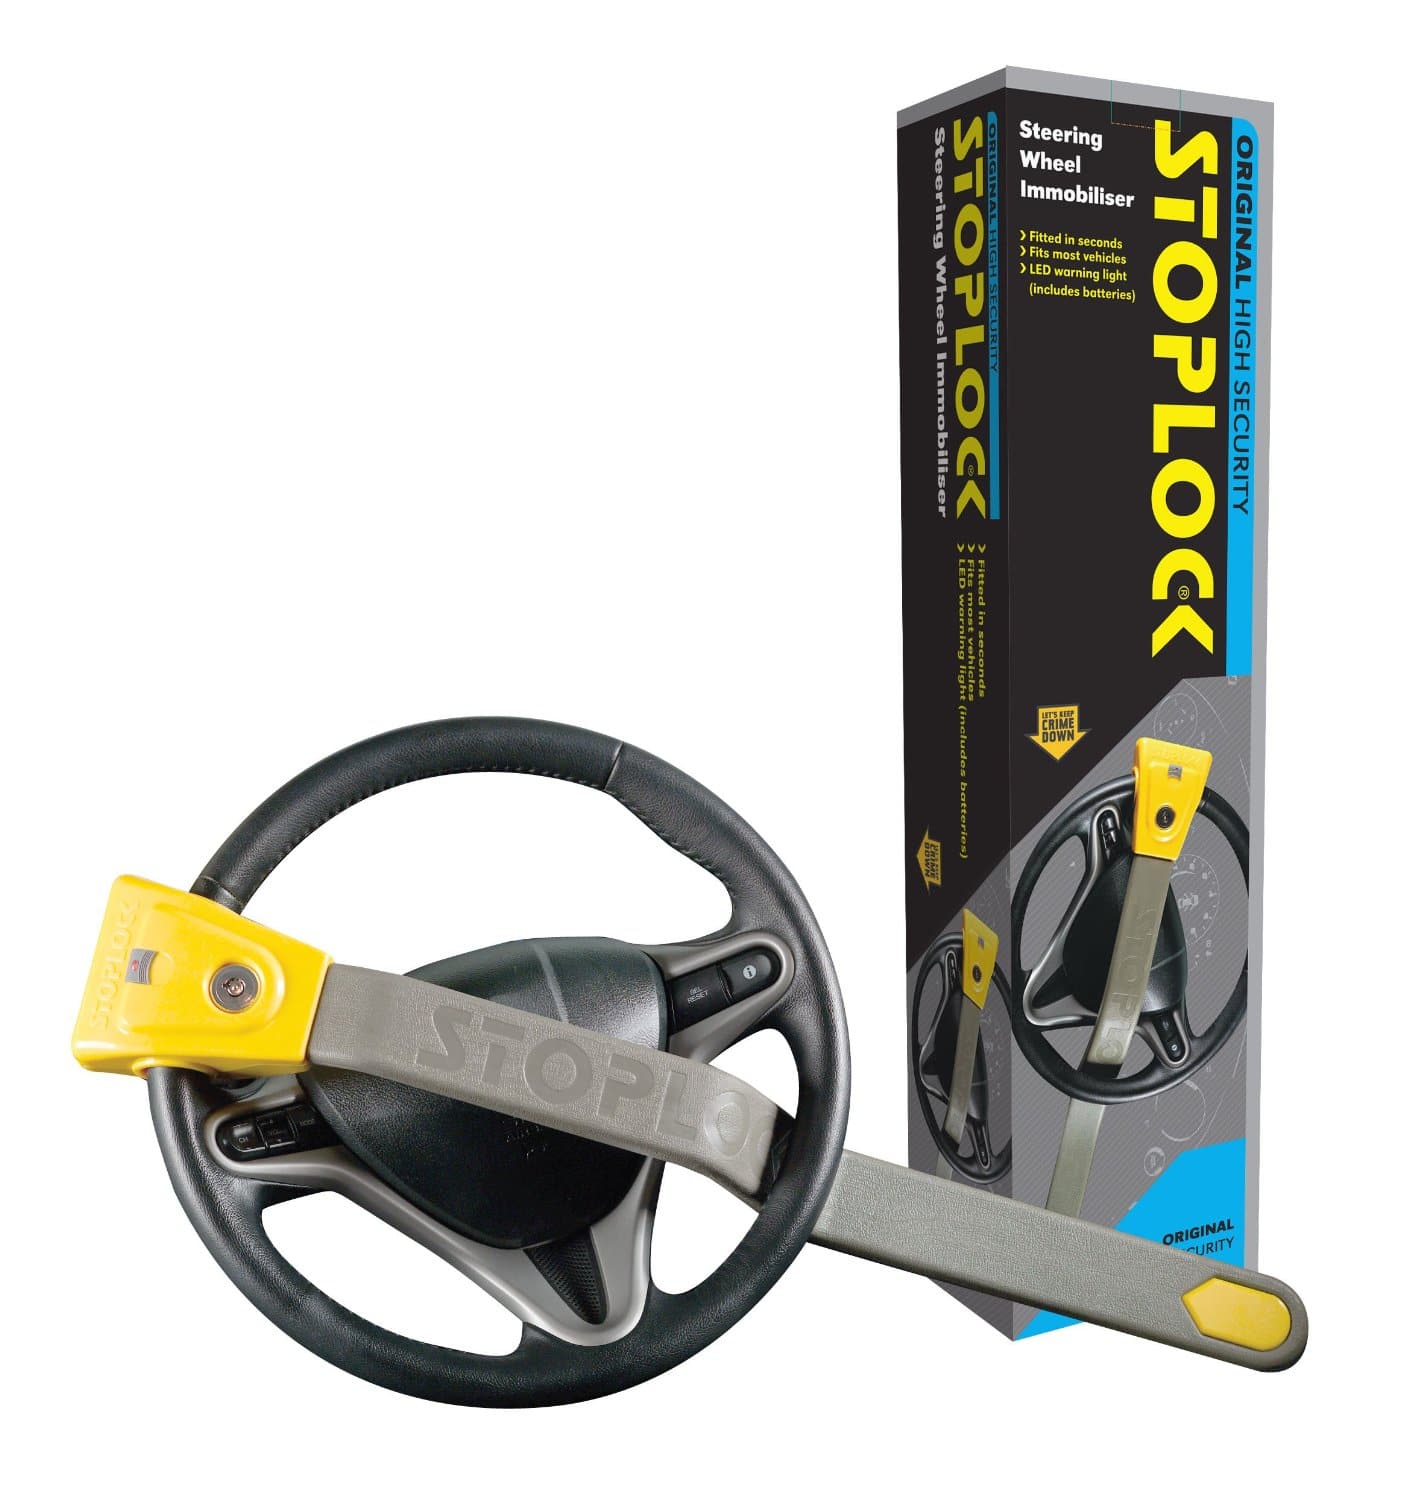 Stoplock Car Steering Wheel Lock Fitting Guide & Compatability